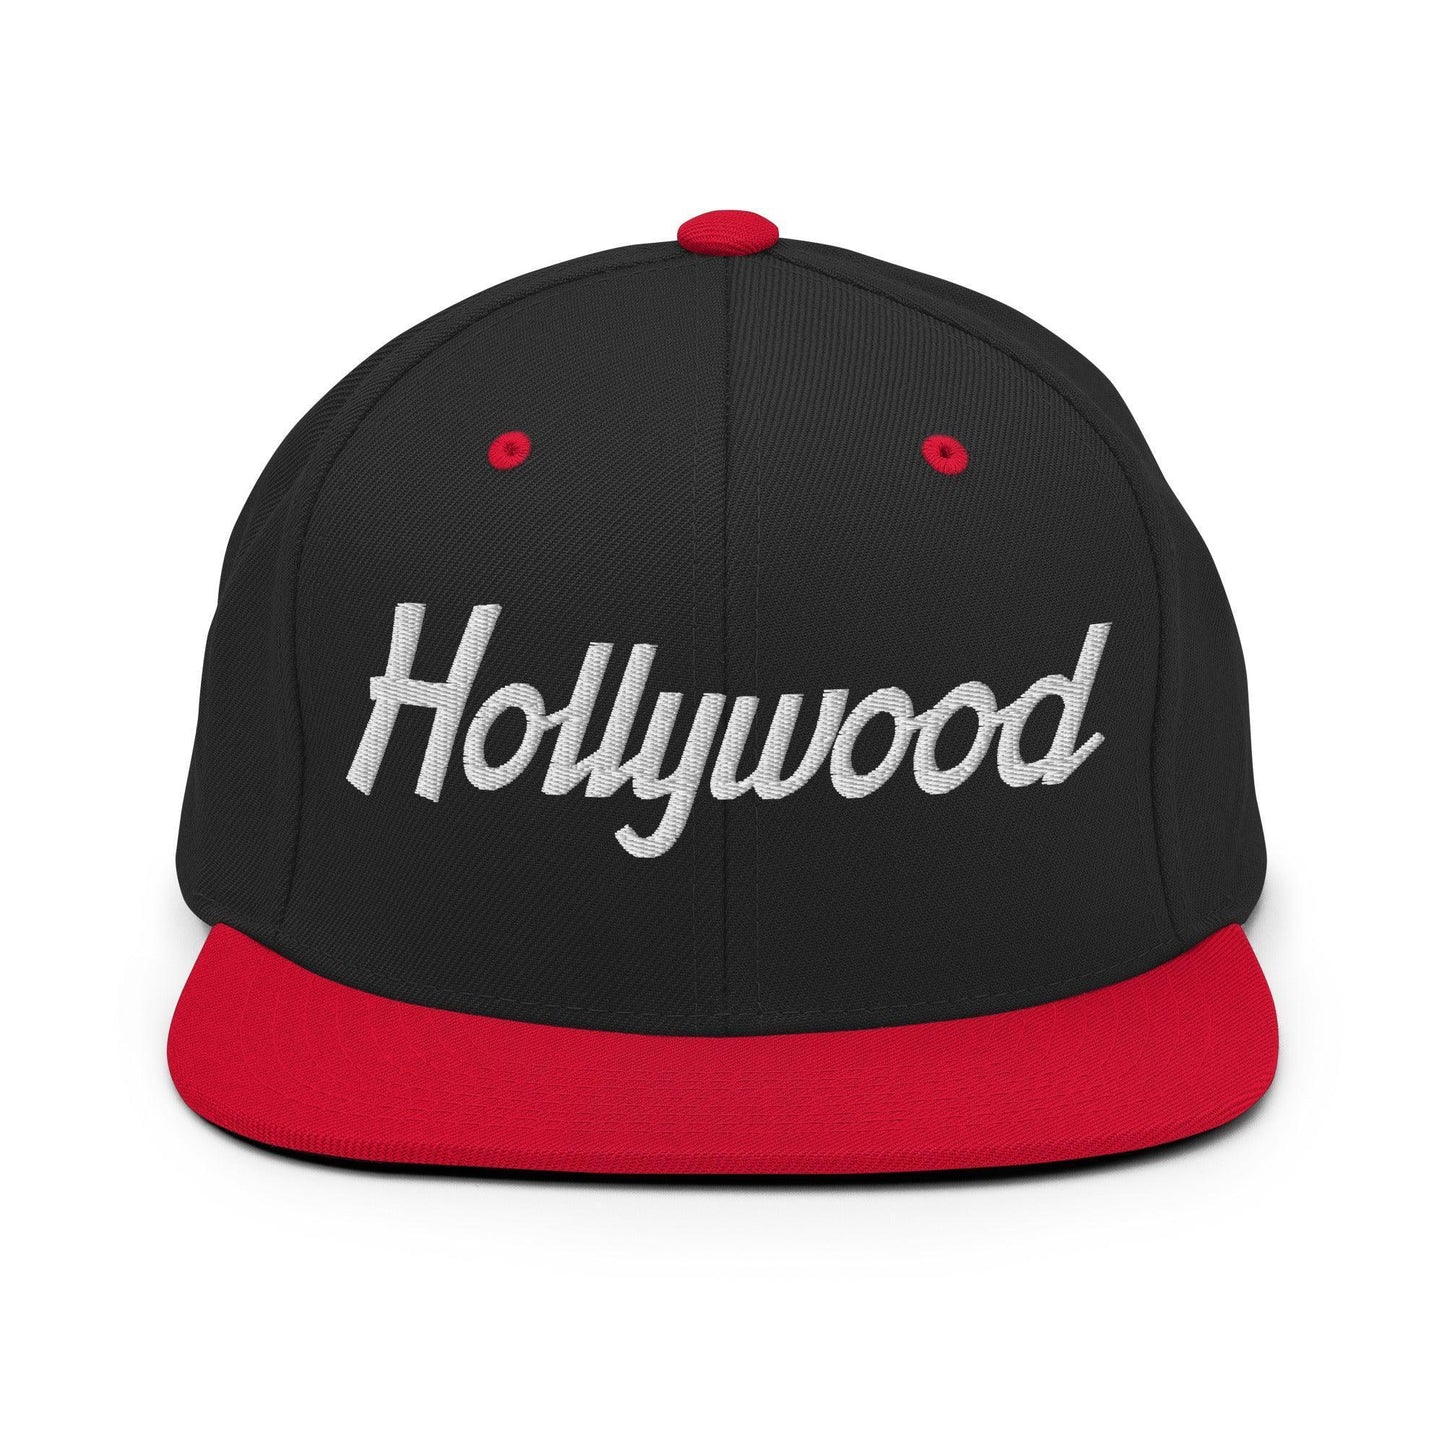 Hollywood Script Snapback Hat Black/ Red